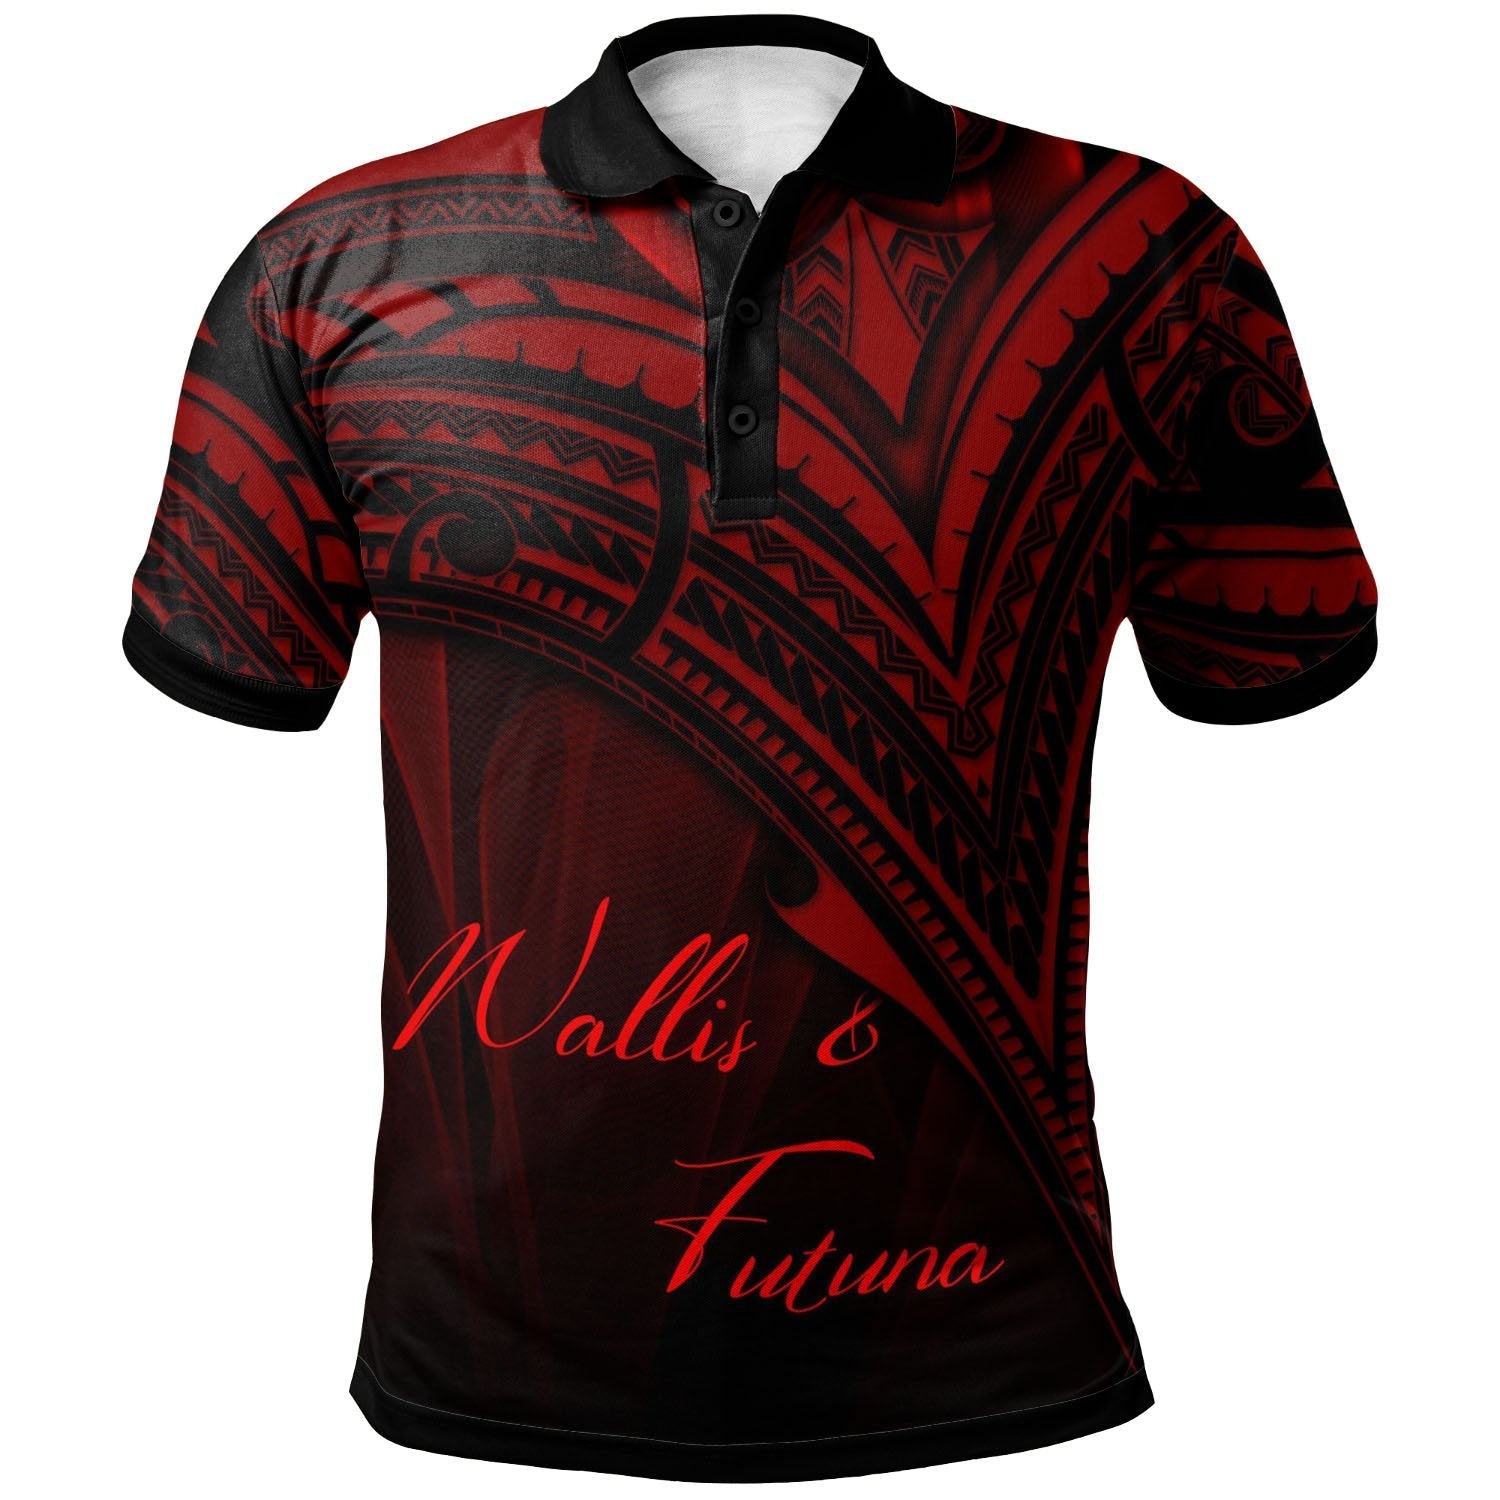 wallis-and-futuna-polo-shirt-red-color-cross-style